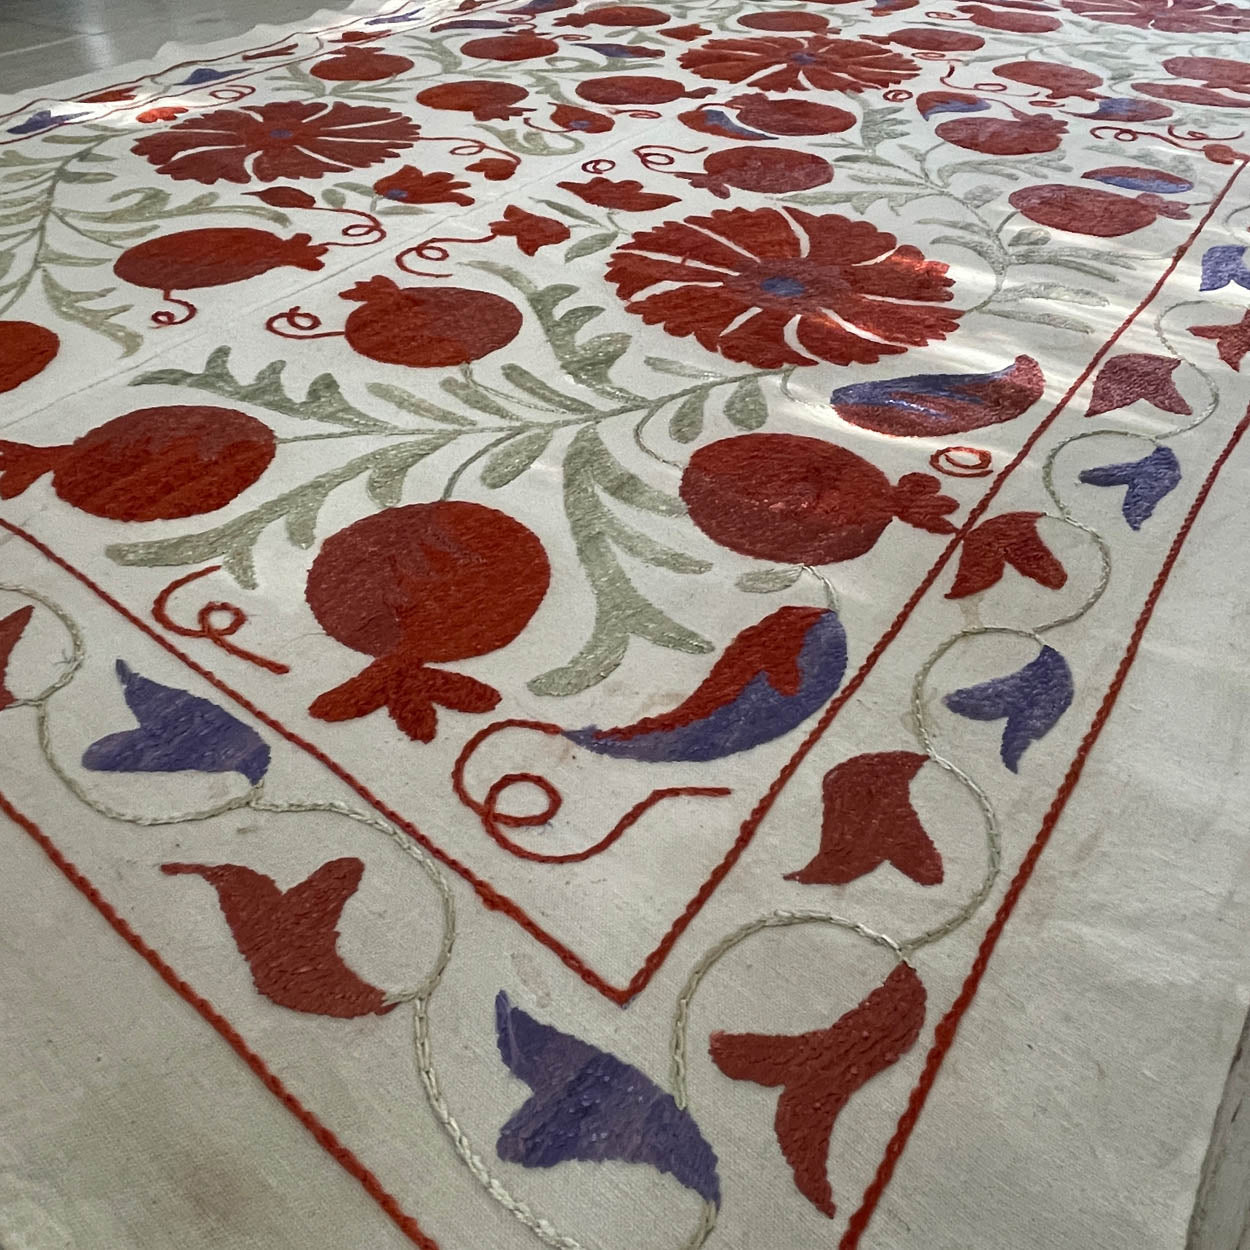 Uzbeki Suzani Hand Embroidered Textile Wall Hanging | Home Décor | Throw | 100cm x 150cm SUZ220518019 - Wildash London